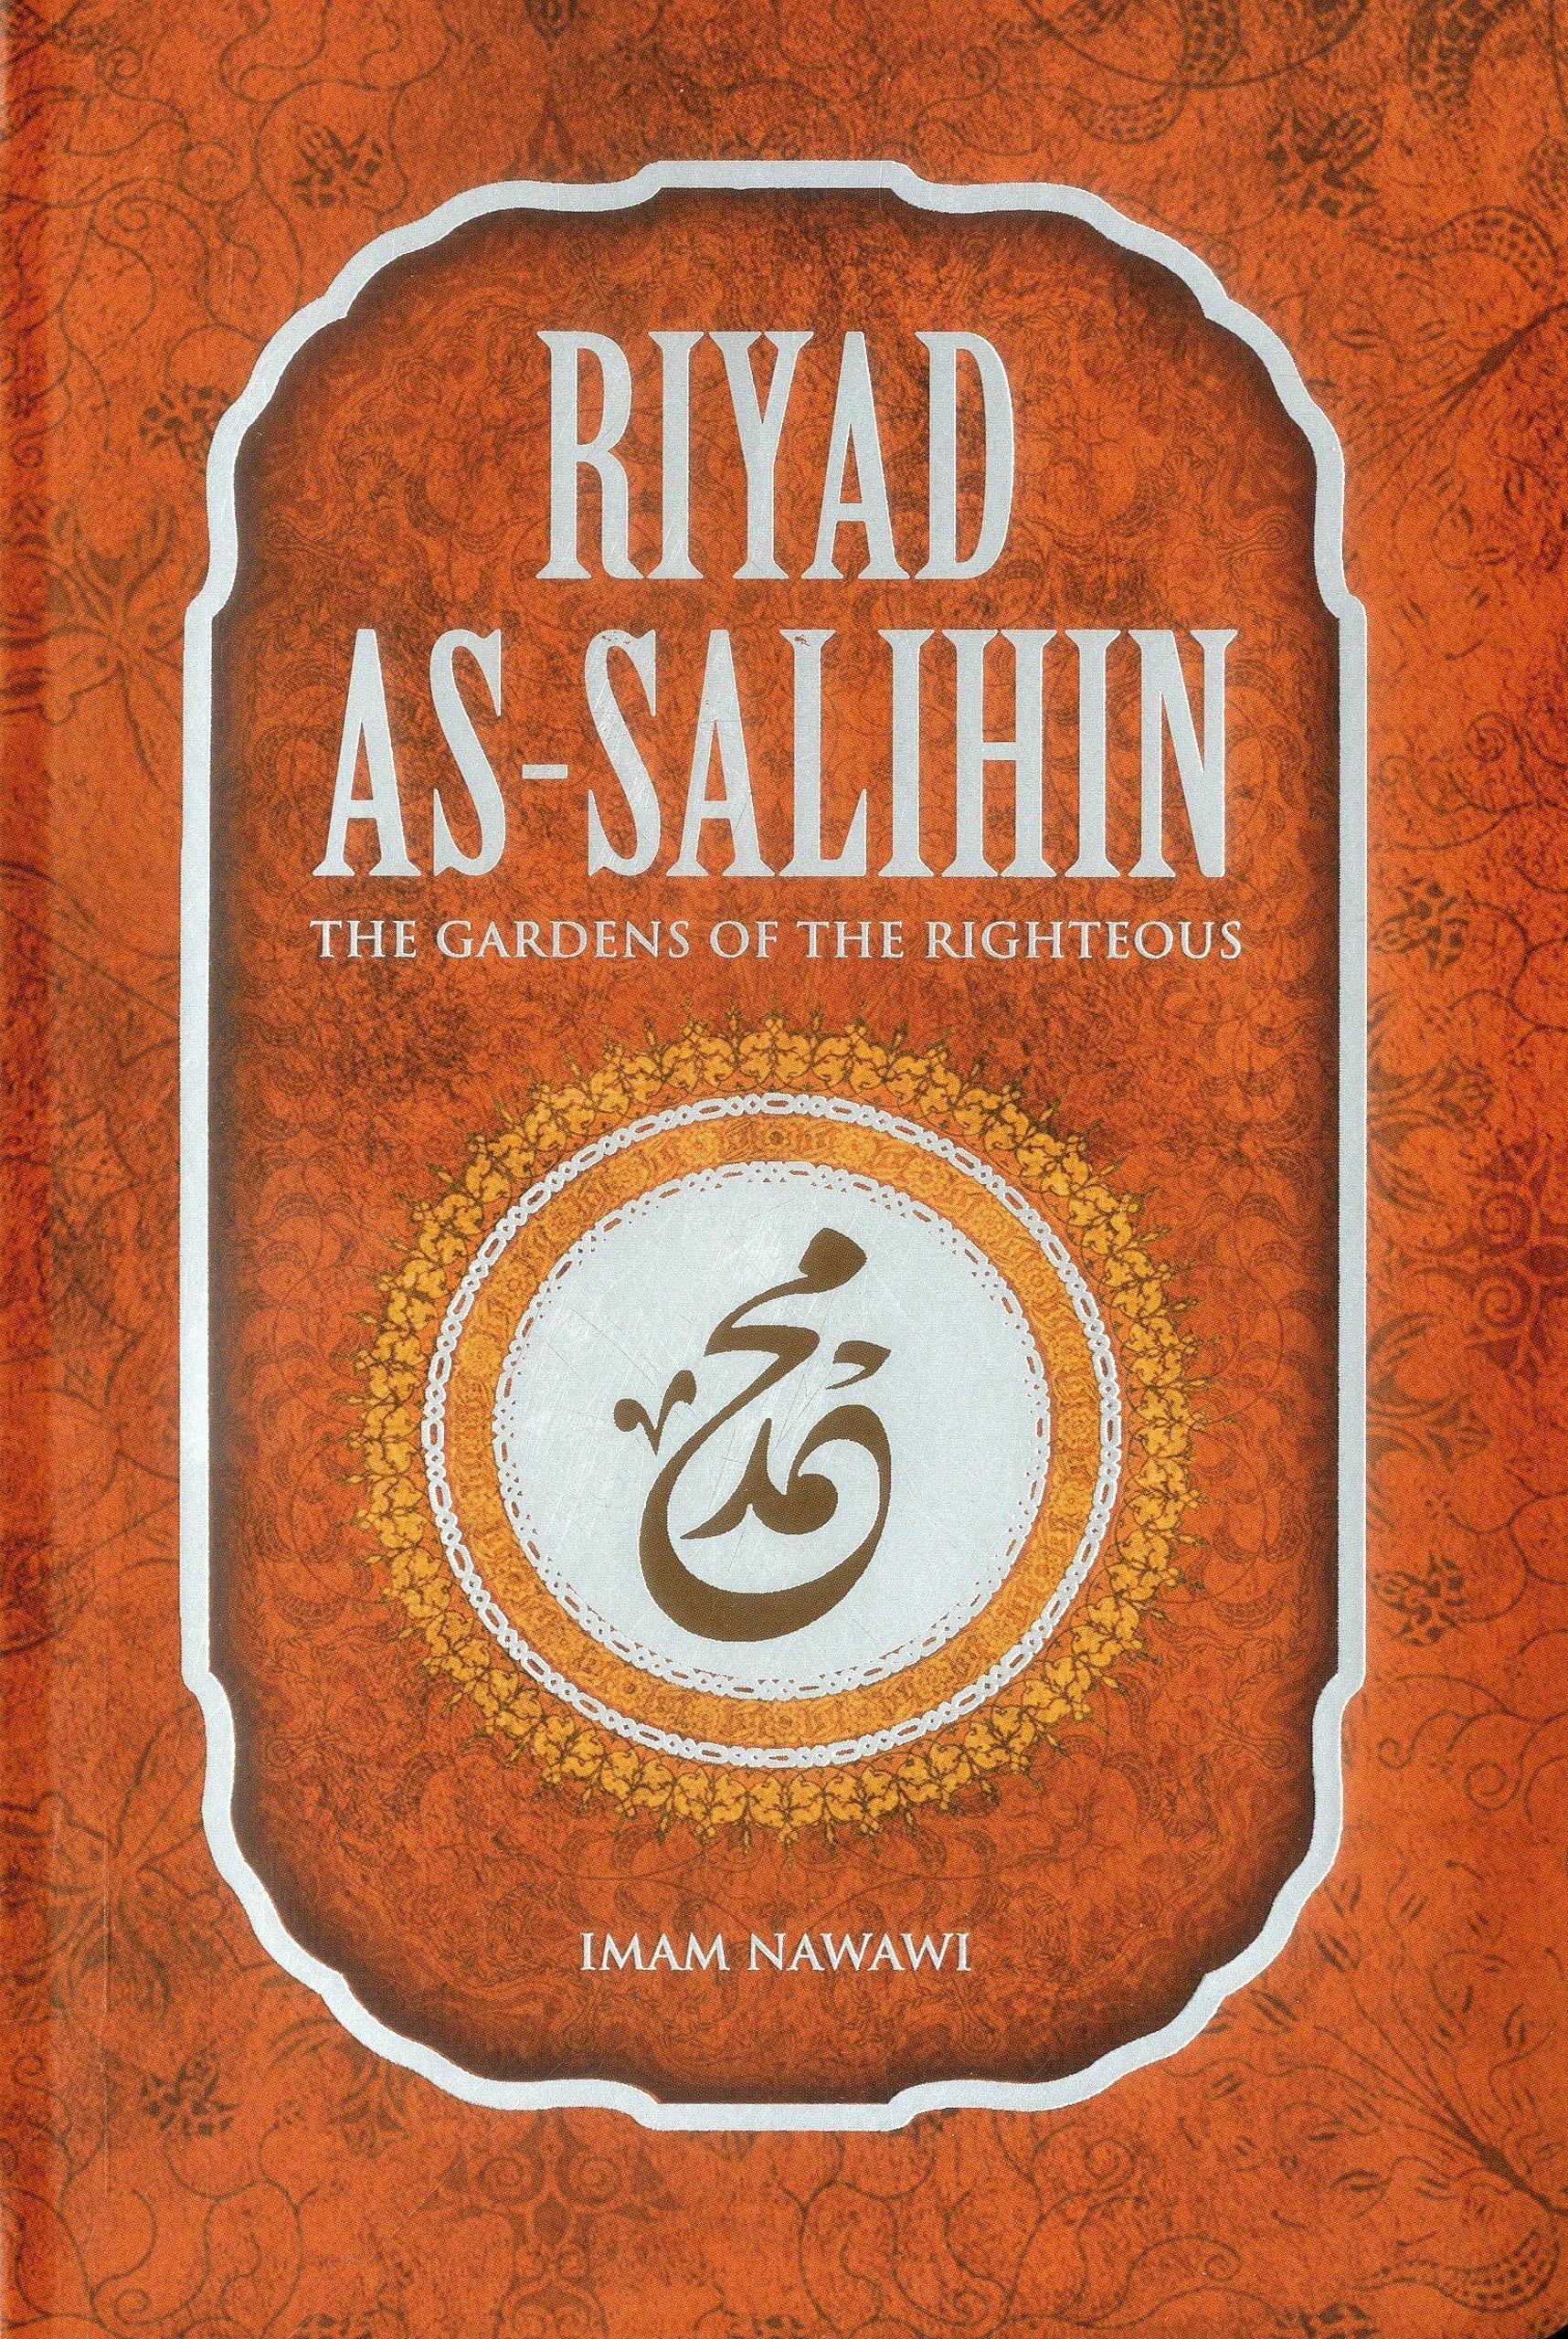 Best Islamic Books to Read (6)